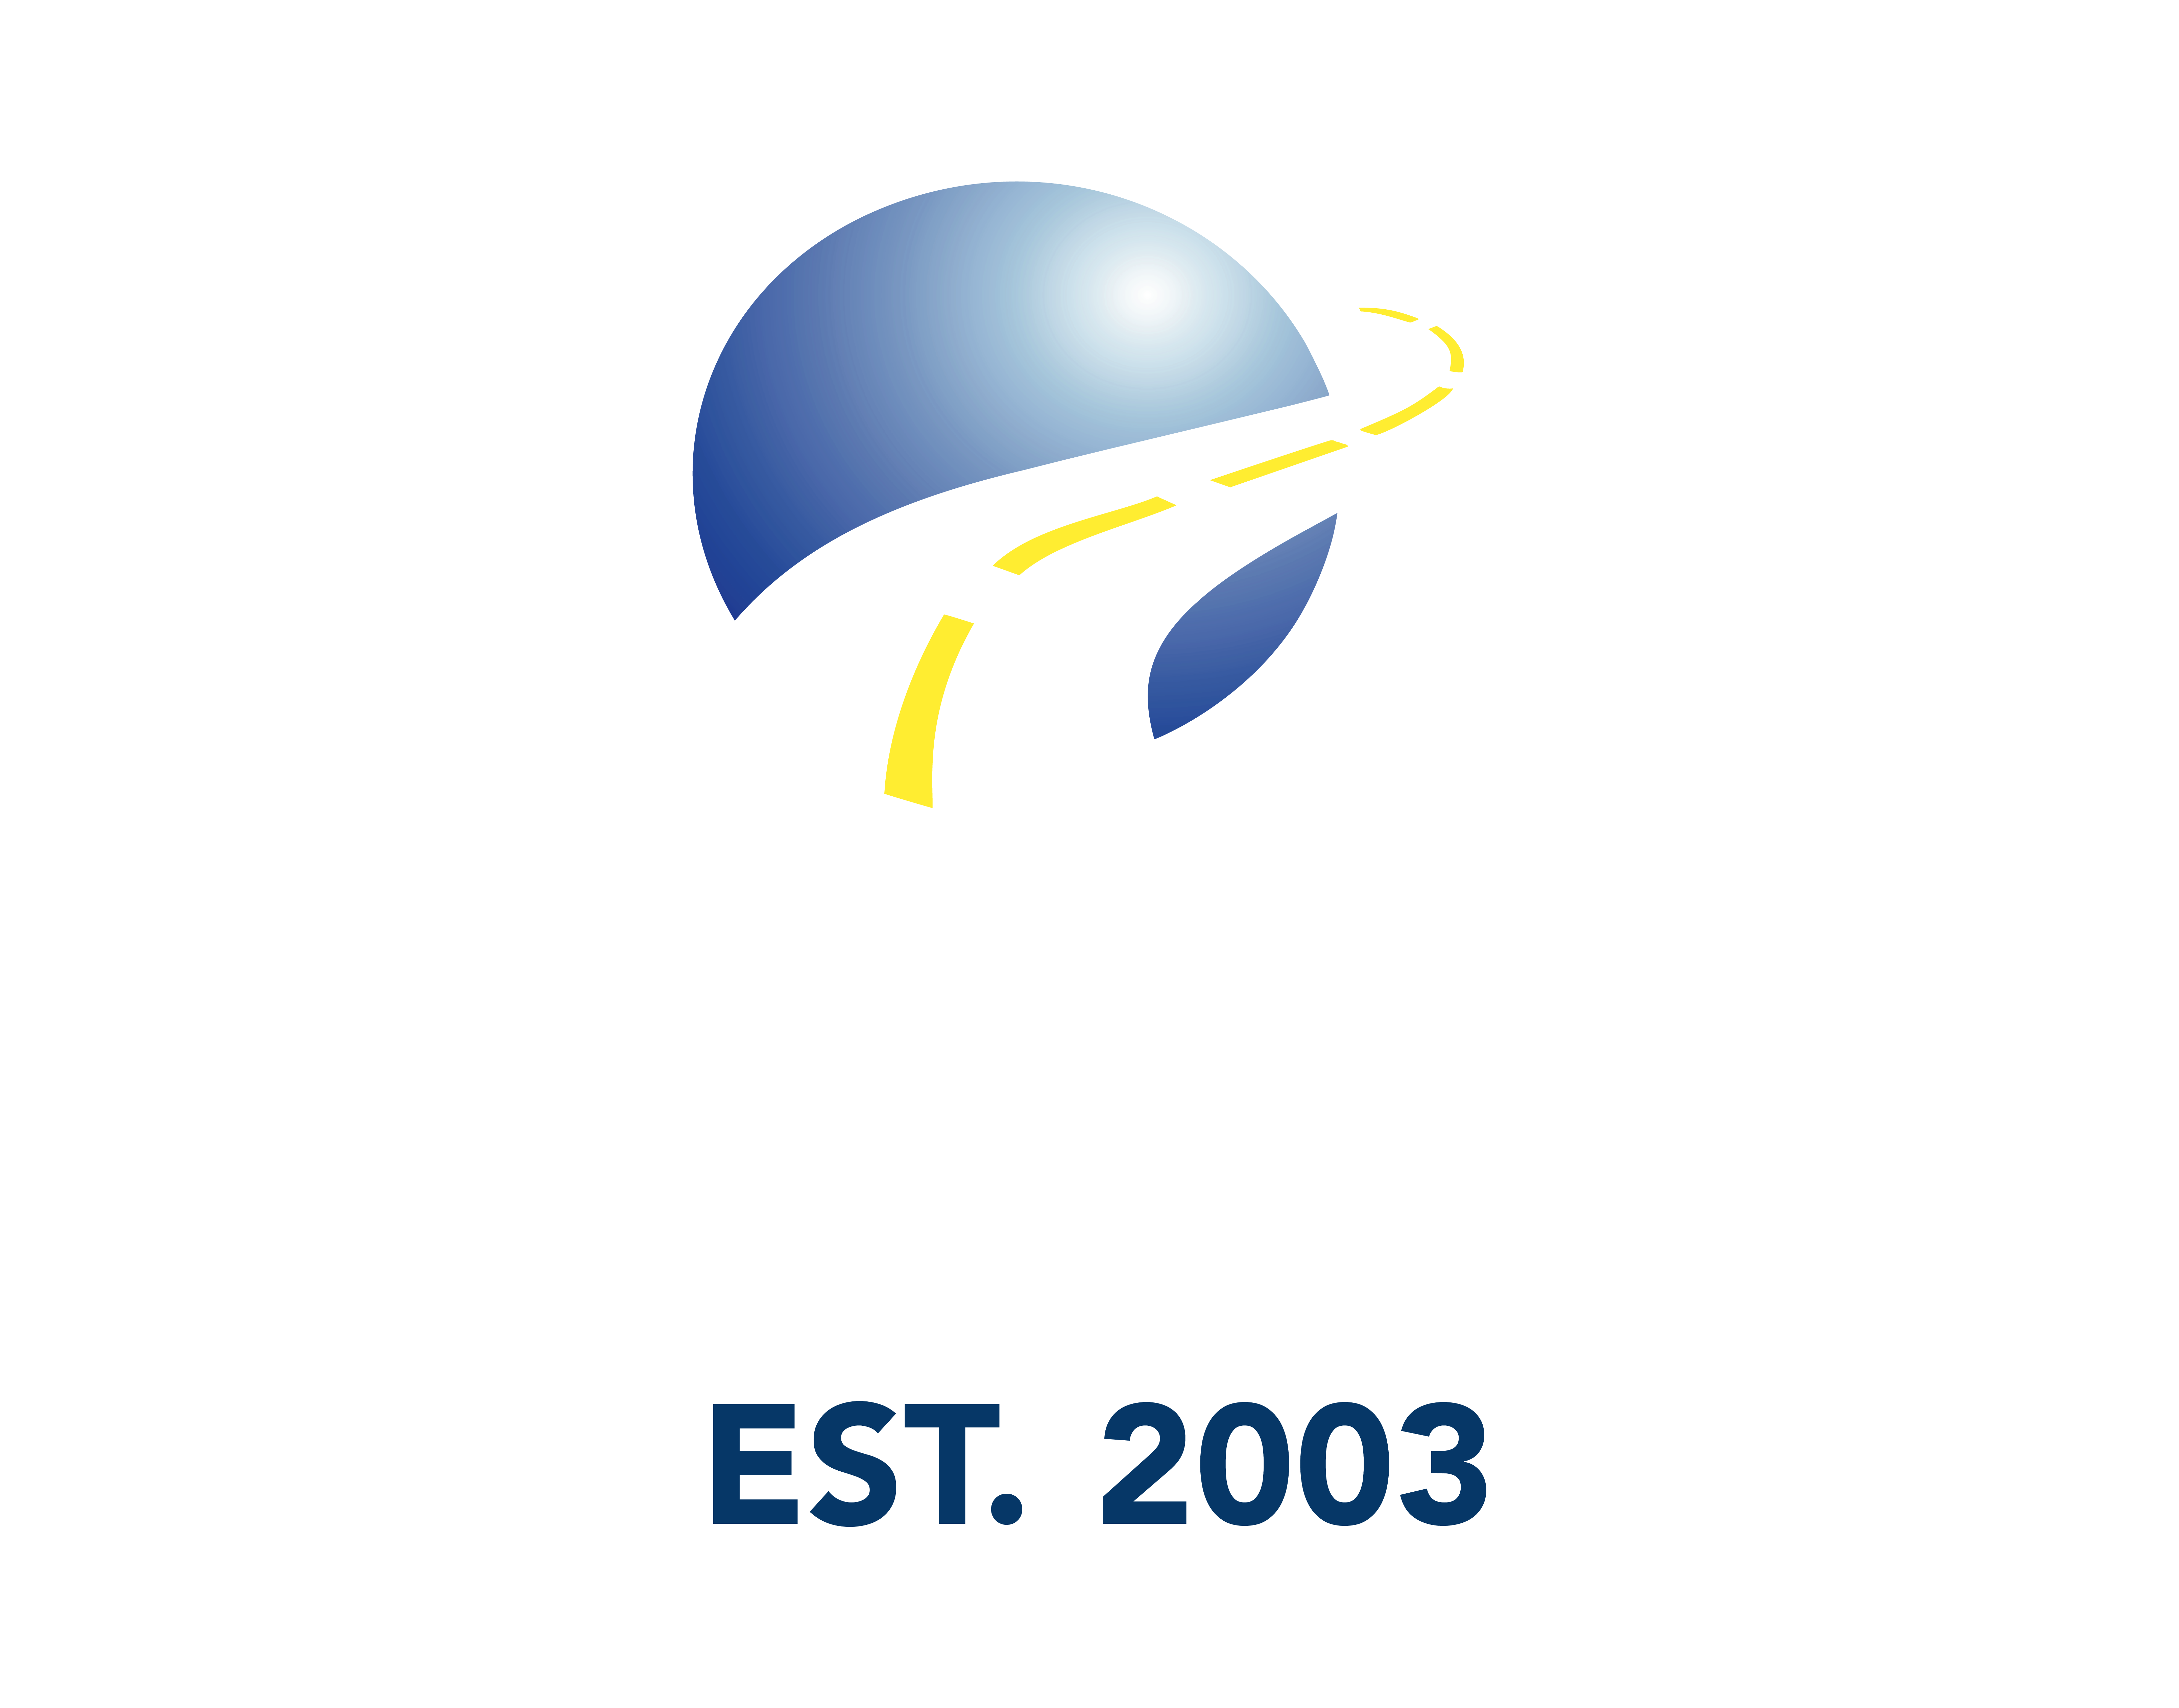 Top Driver Driving School